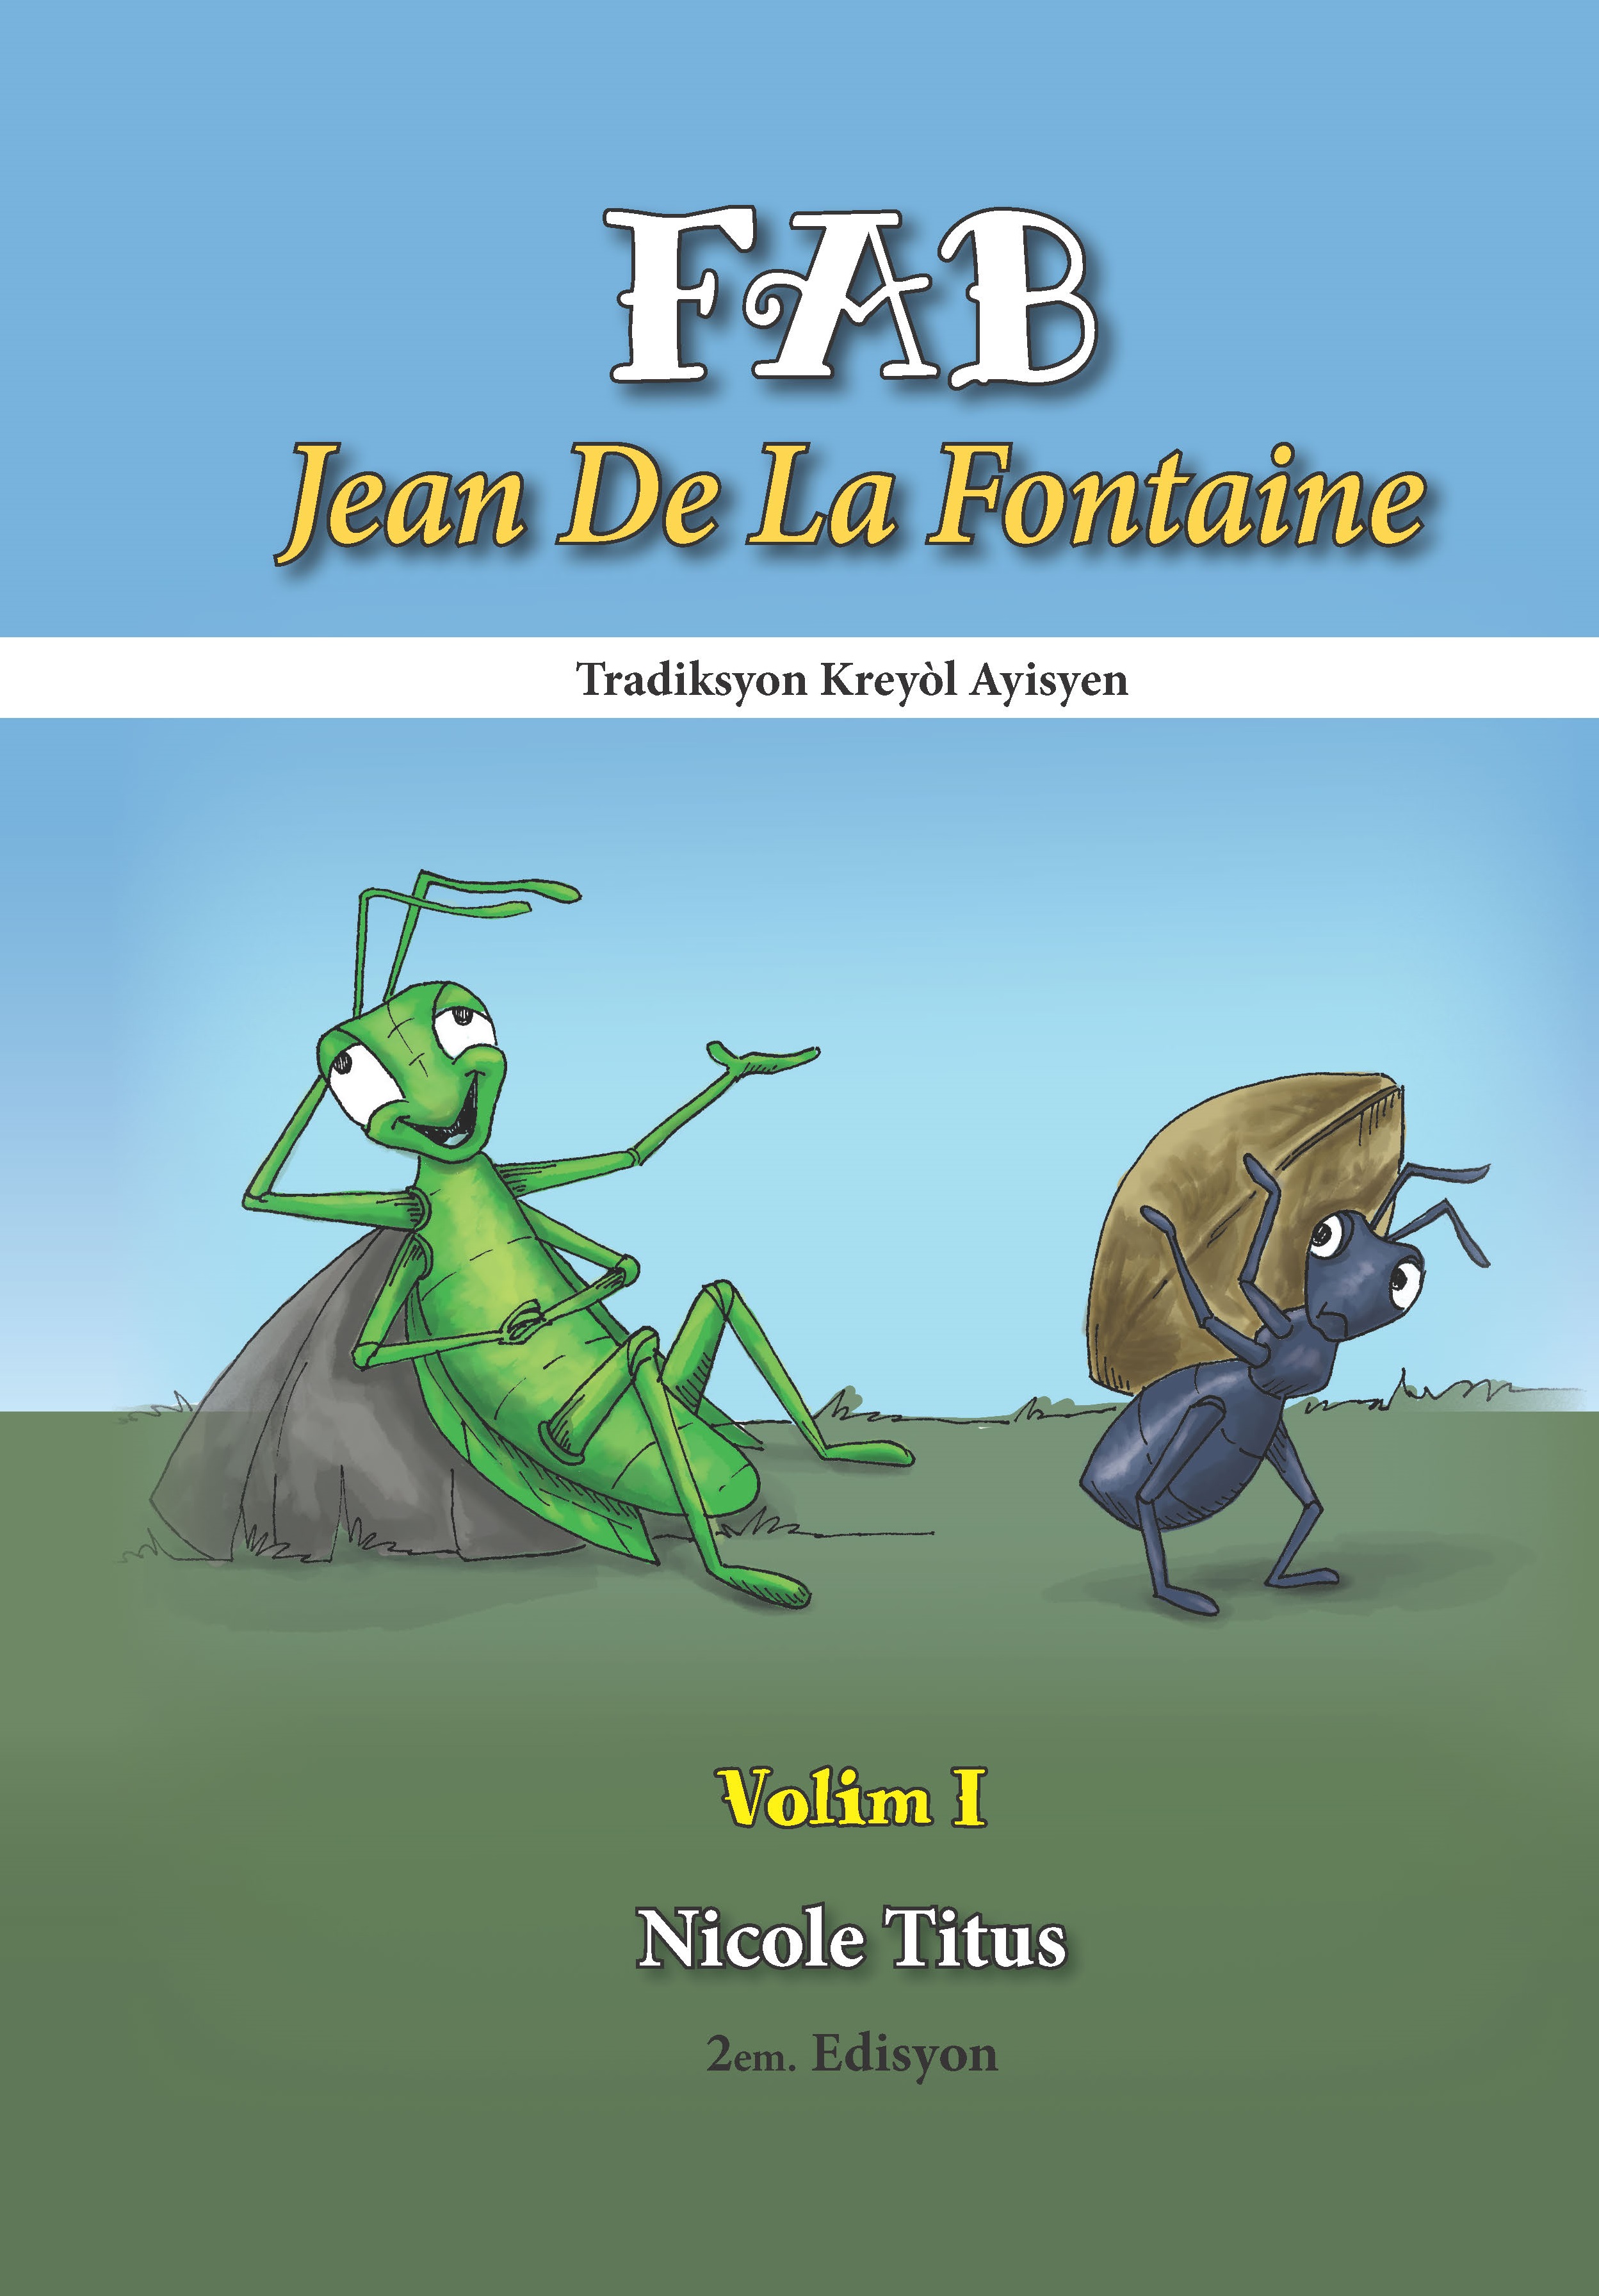 Fab Jean de La Fontaine